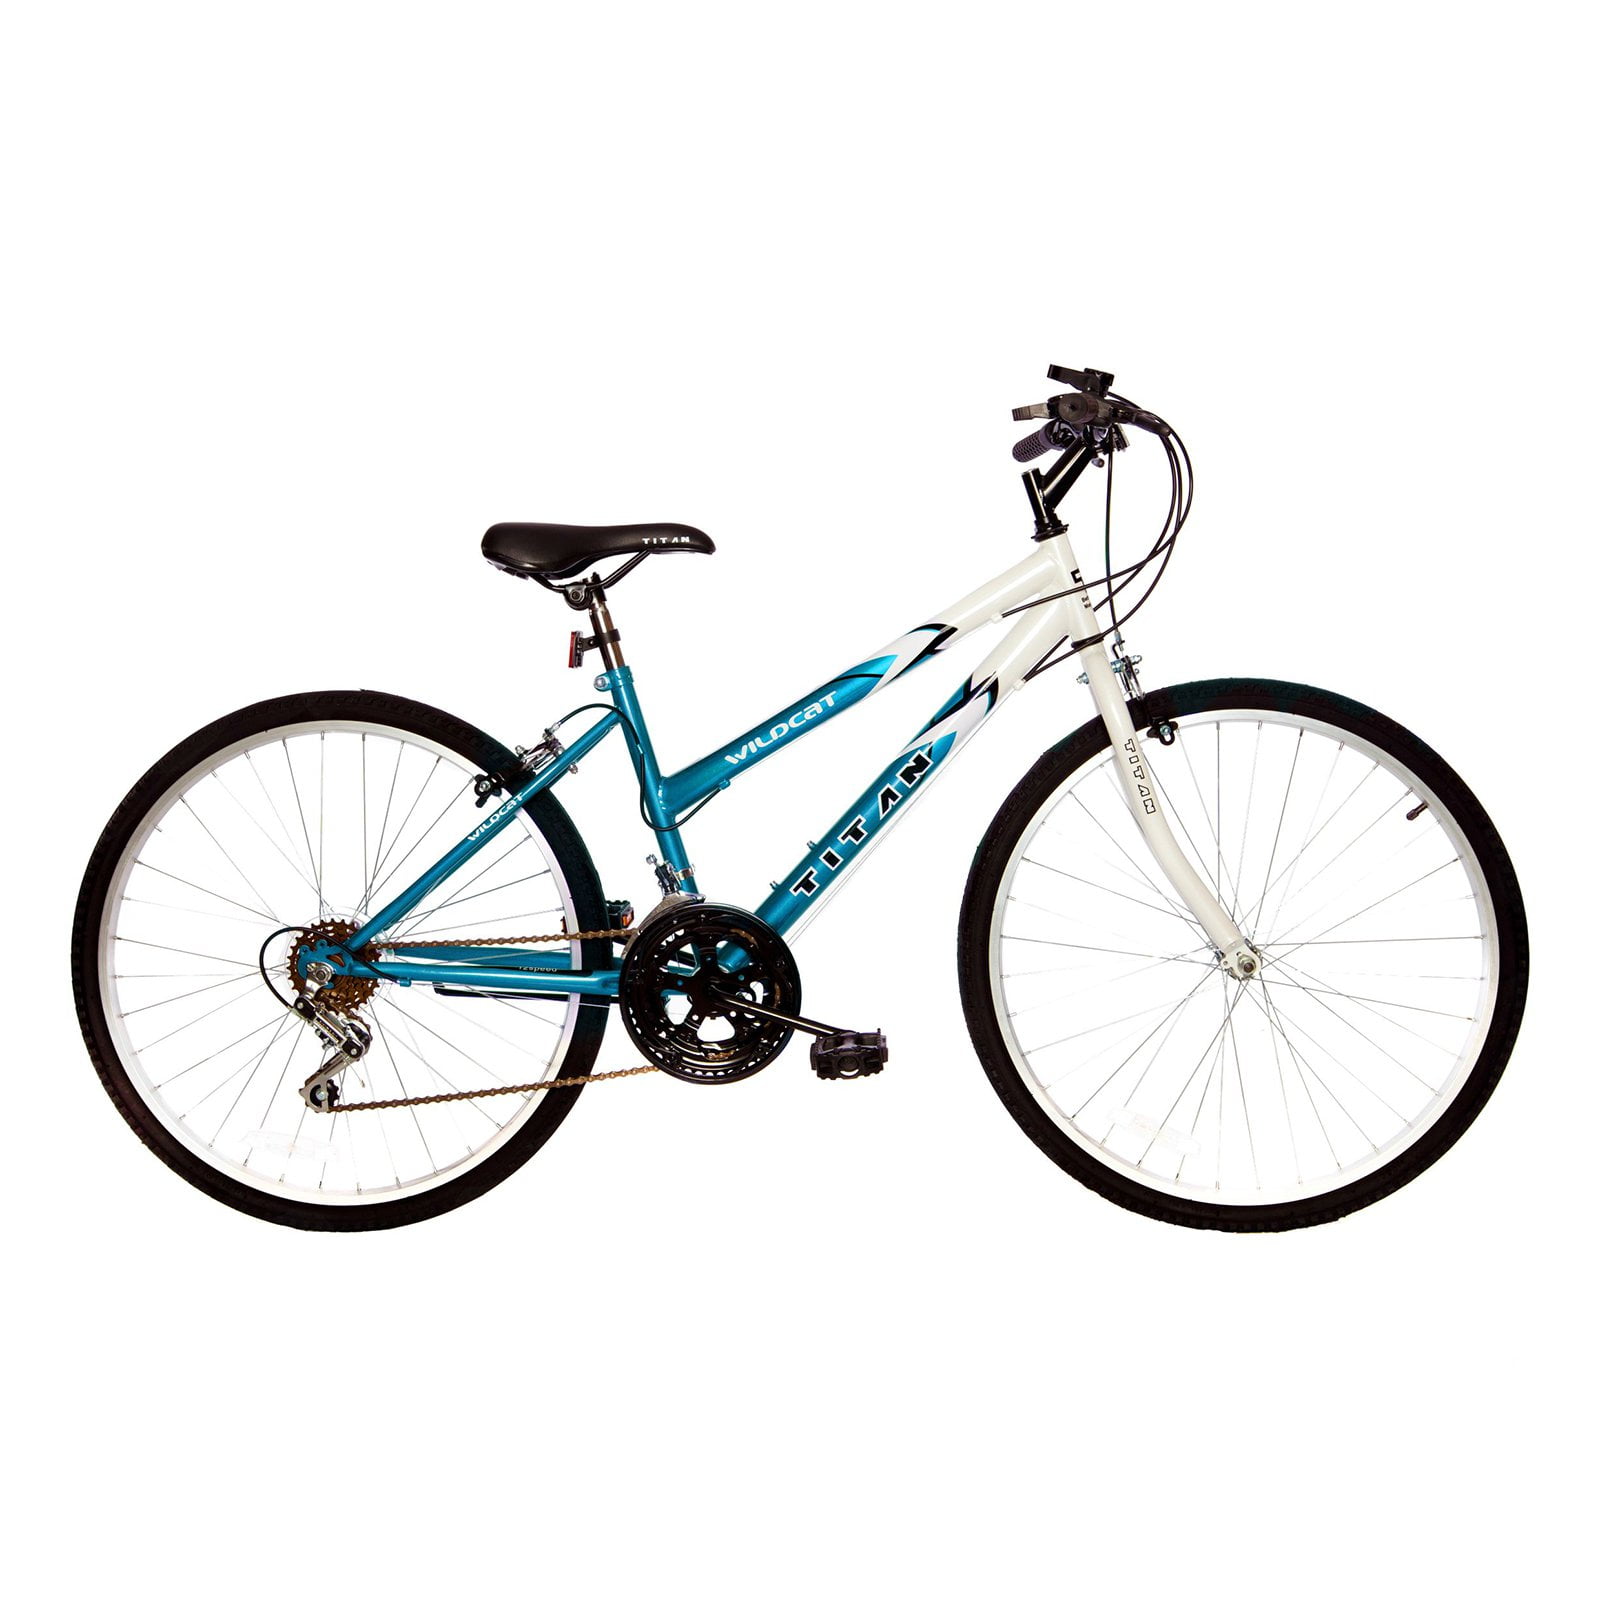 26" Women's Bicycle 26-Inch Wheel 21 Speed Outdoor Ride Girls Mountain Bike BK 